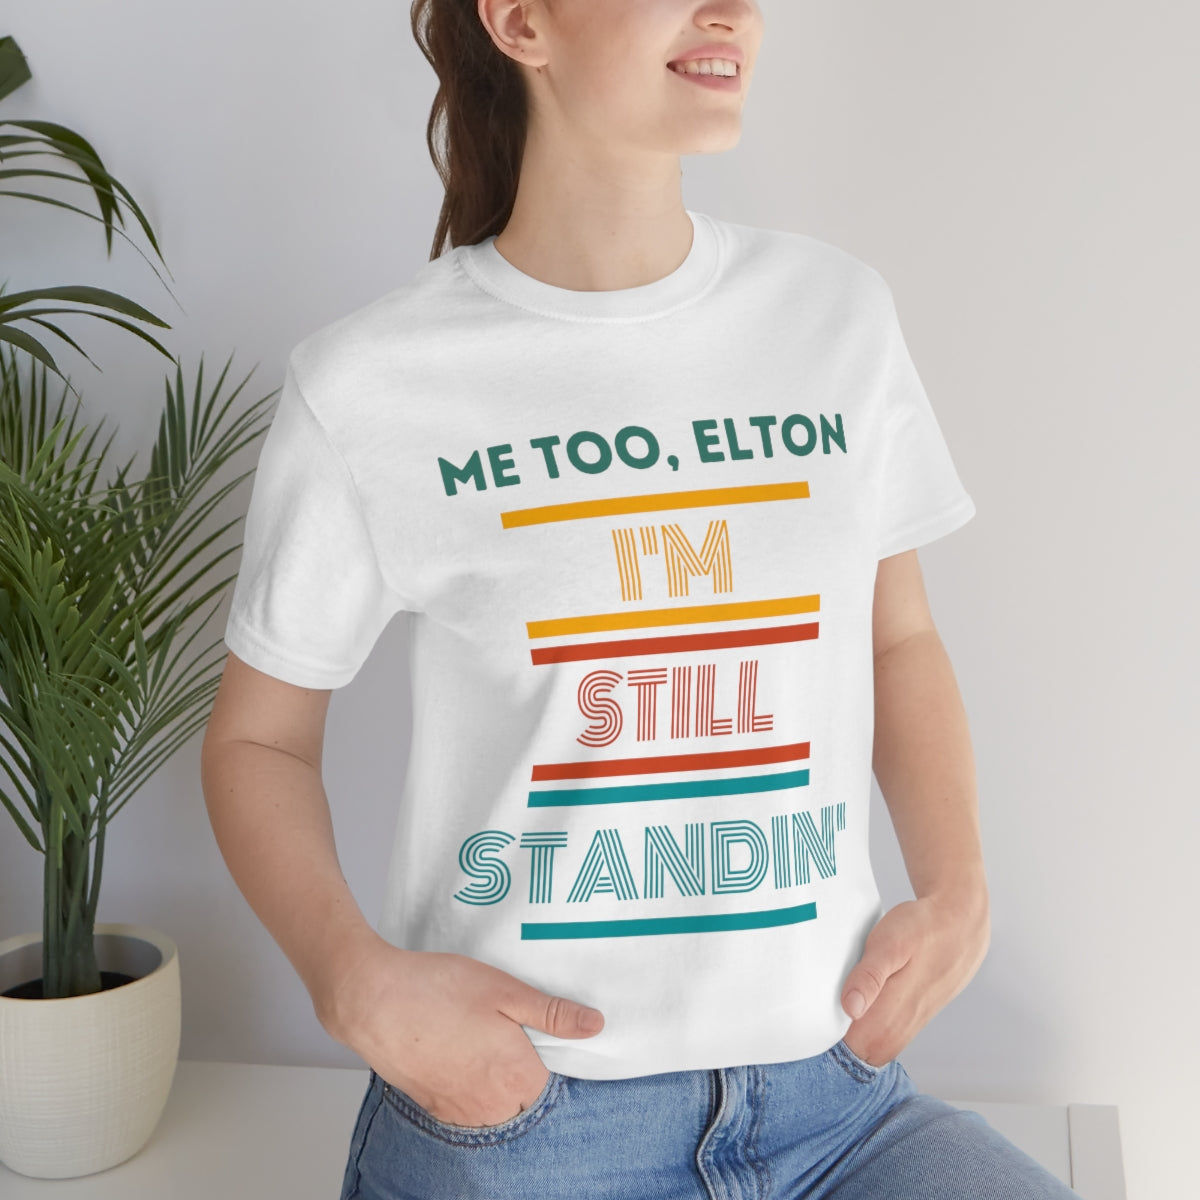 "Me Too, Elton" T-Shirt (White. Black, & Natural Available)